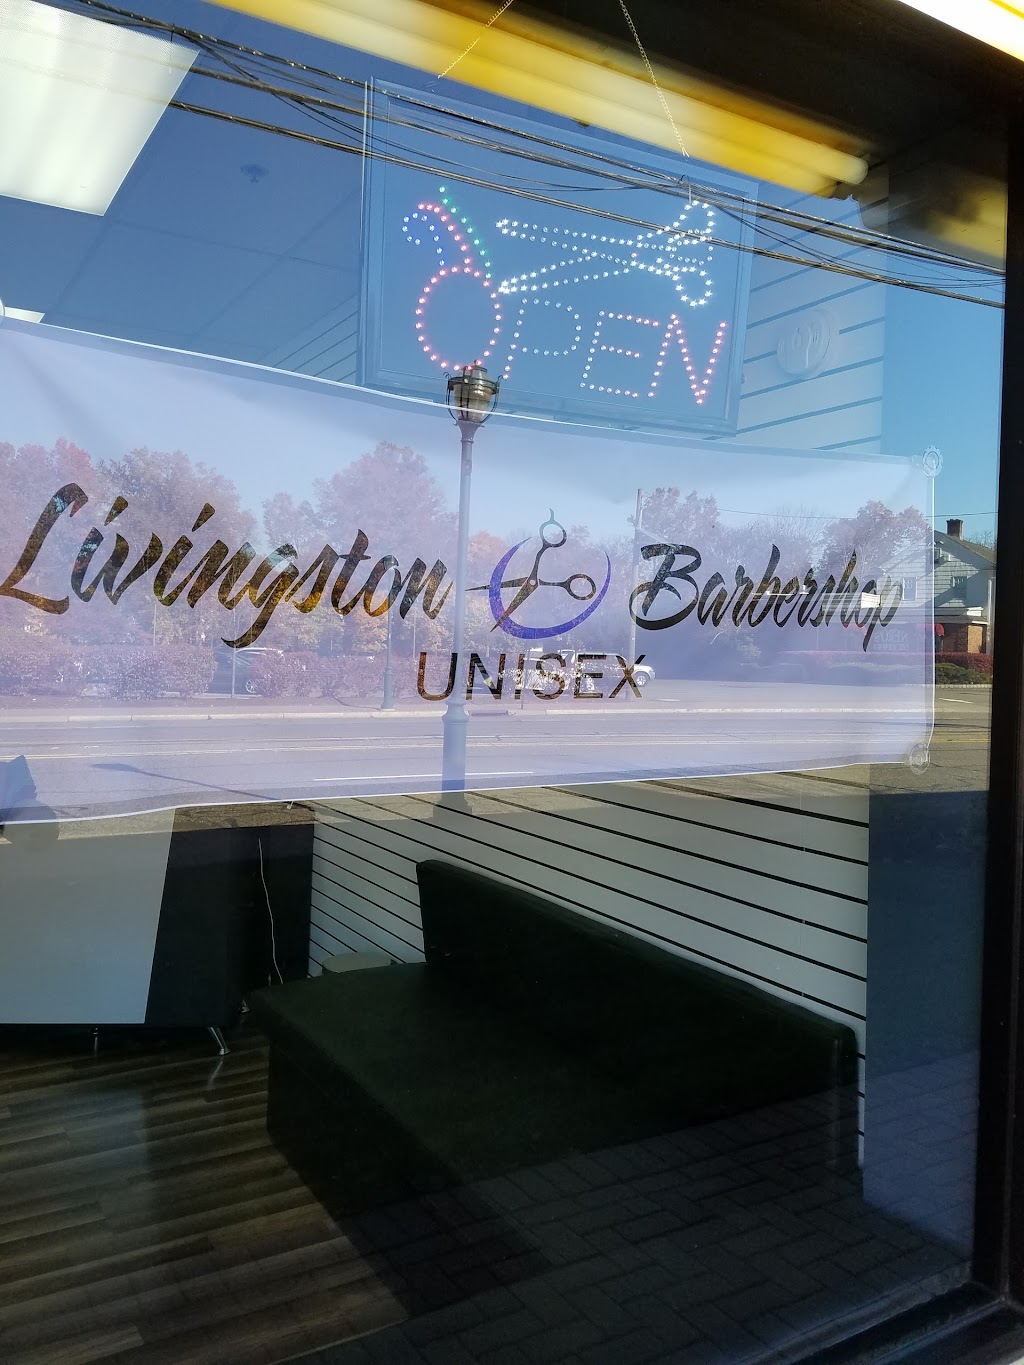 Livingston Barbershop Unisex | 615 S Livingston Ave, Livingston, NJ 07039 | Phone: (973) 535-0933